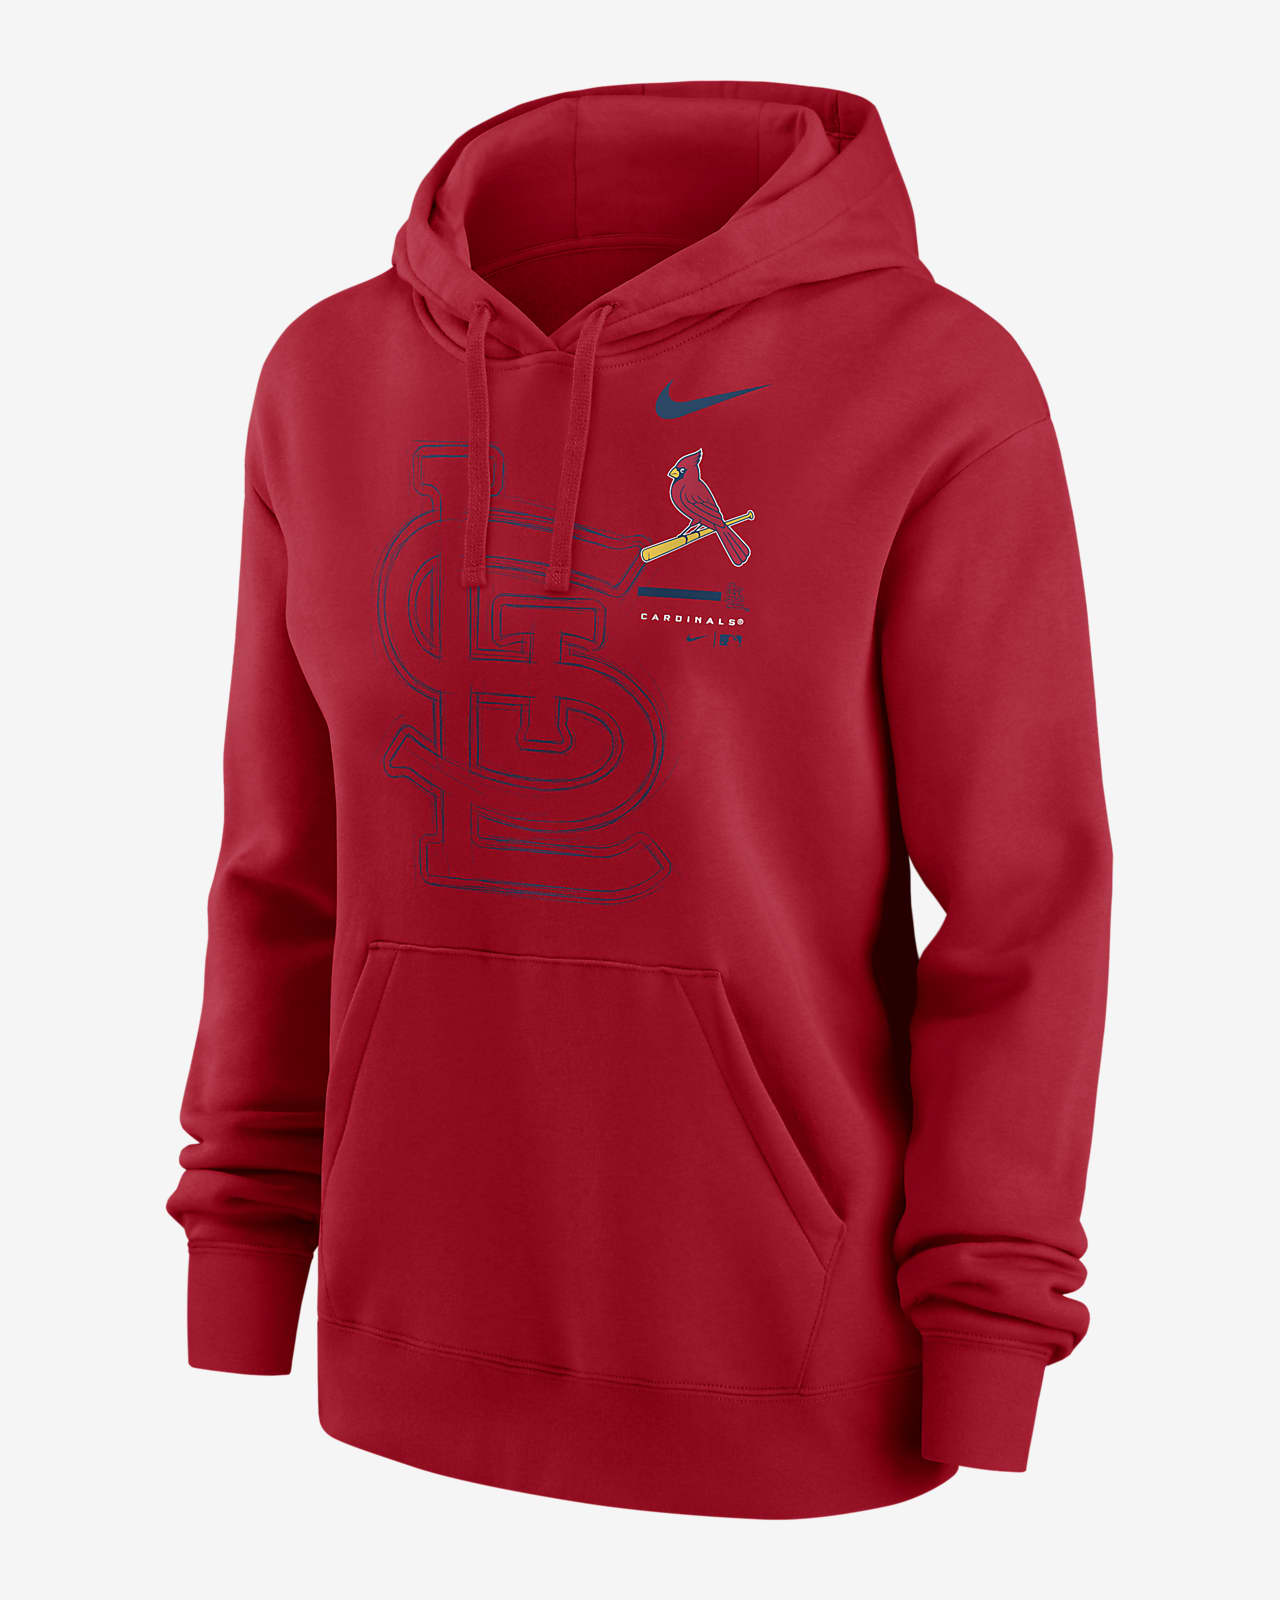 St. Louis Cardinals Sweatshirt, Cardinals Hoodies, Cardinals